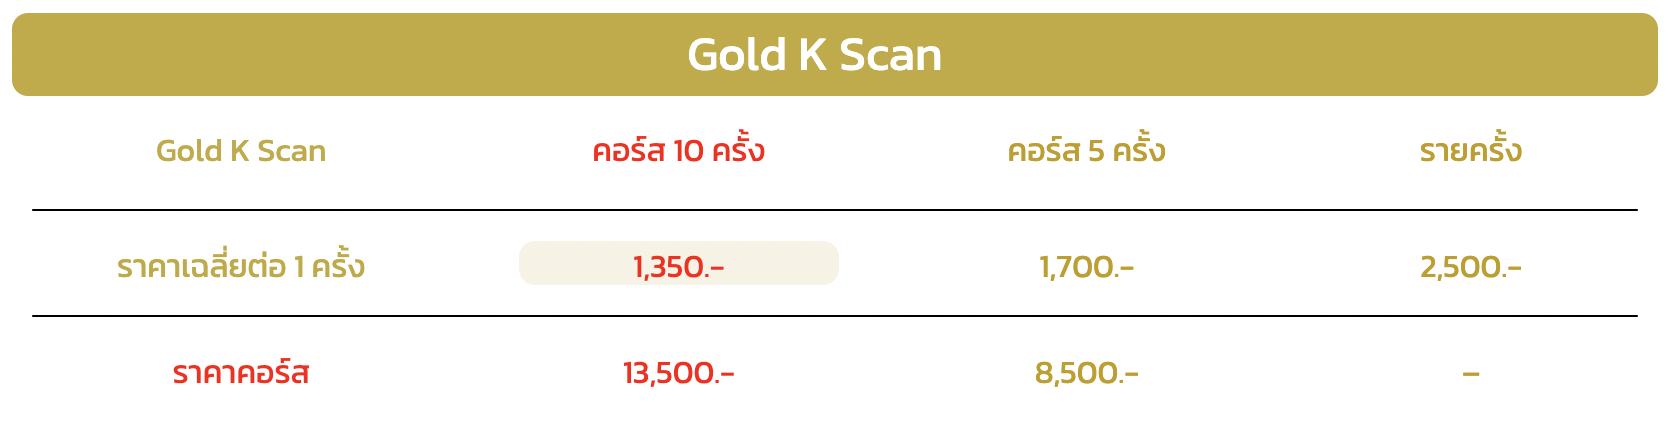 Gold K Scan รักษารอยสิว